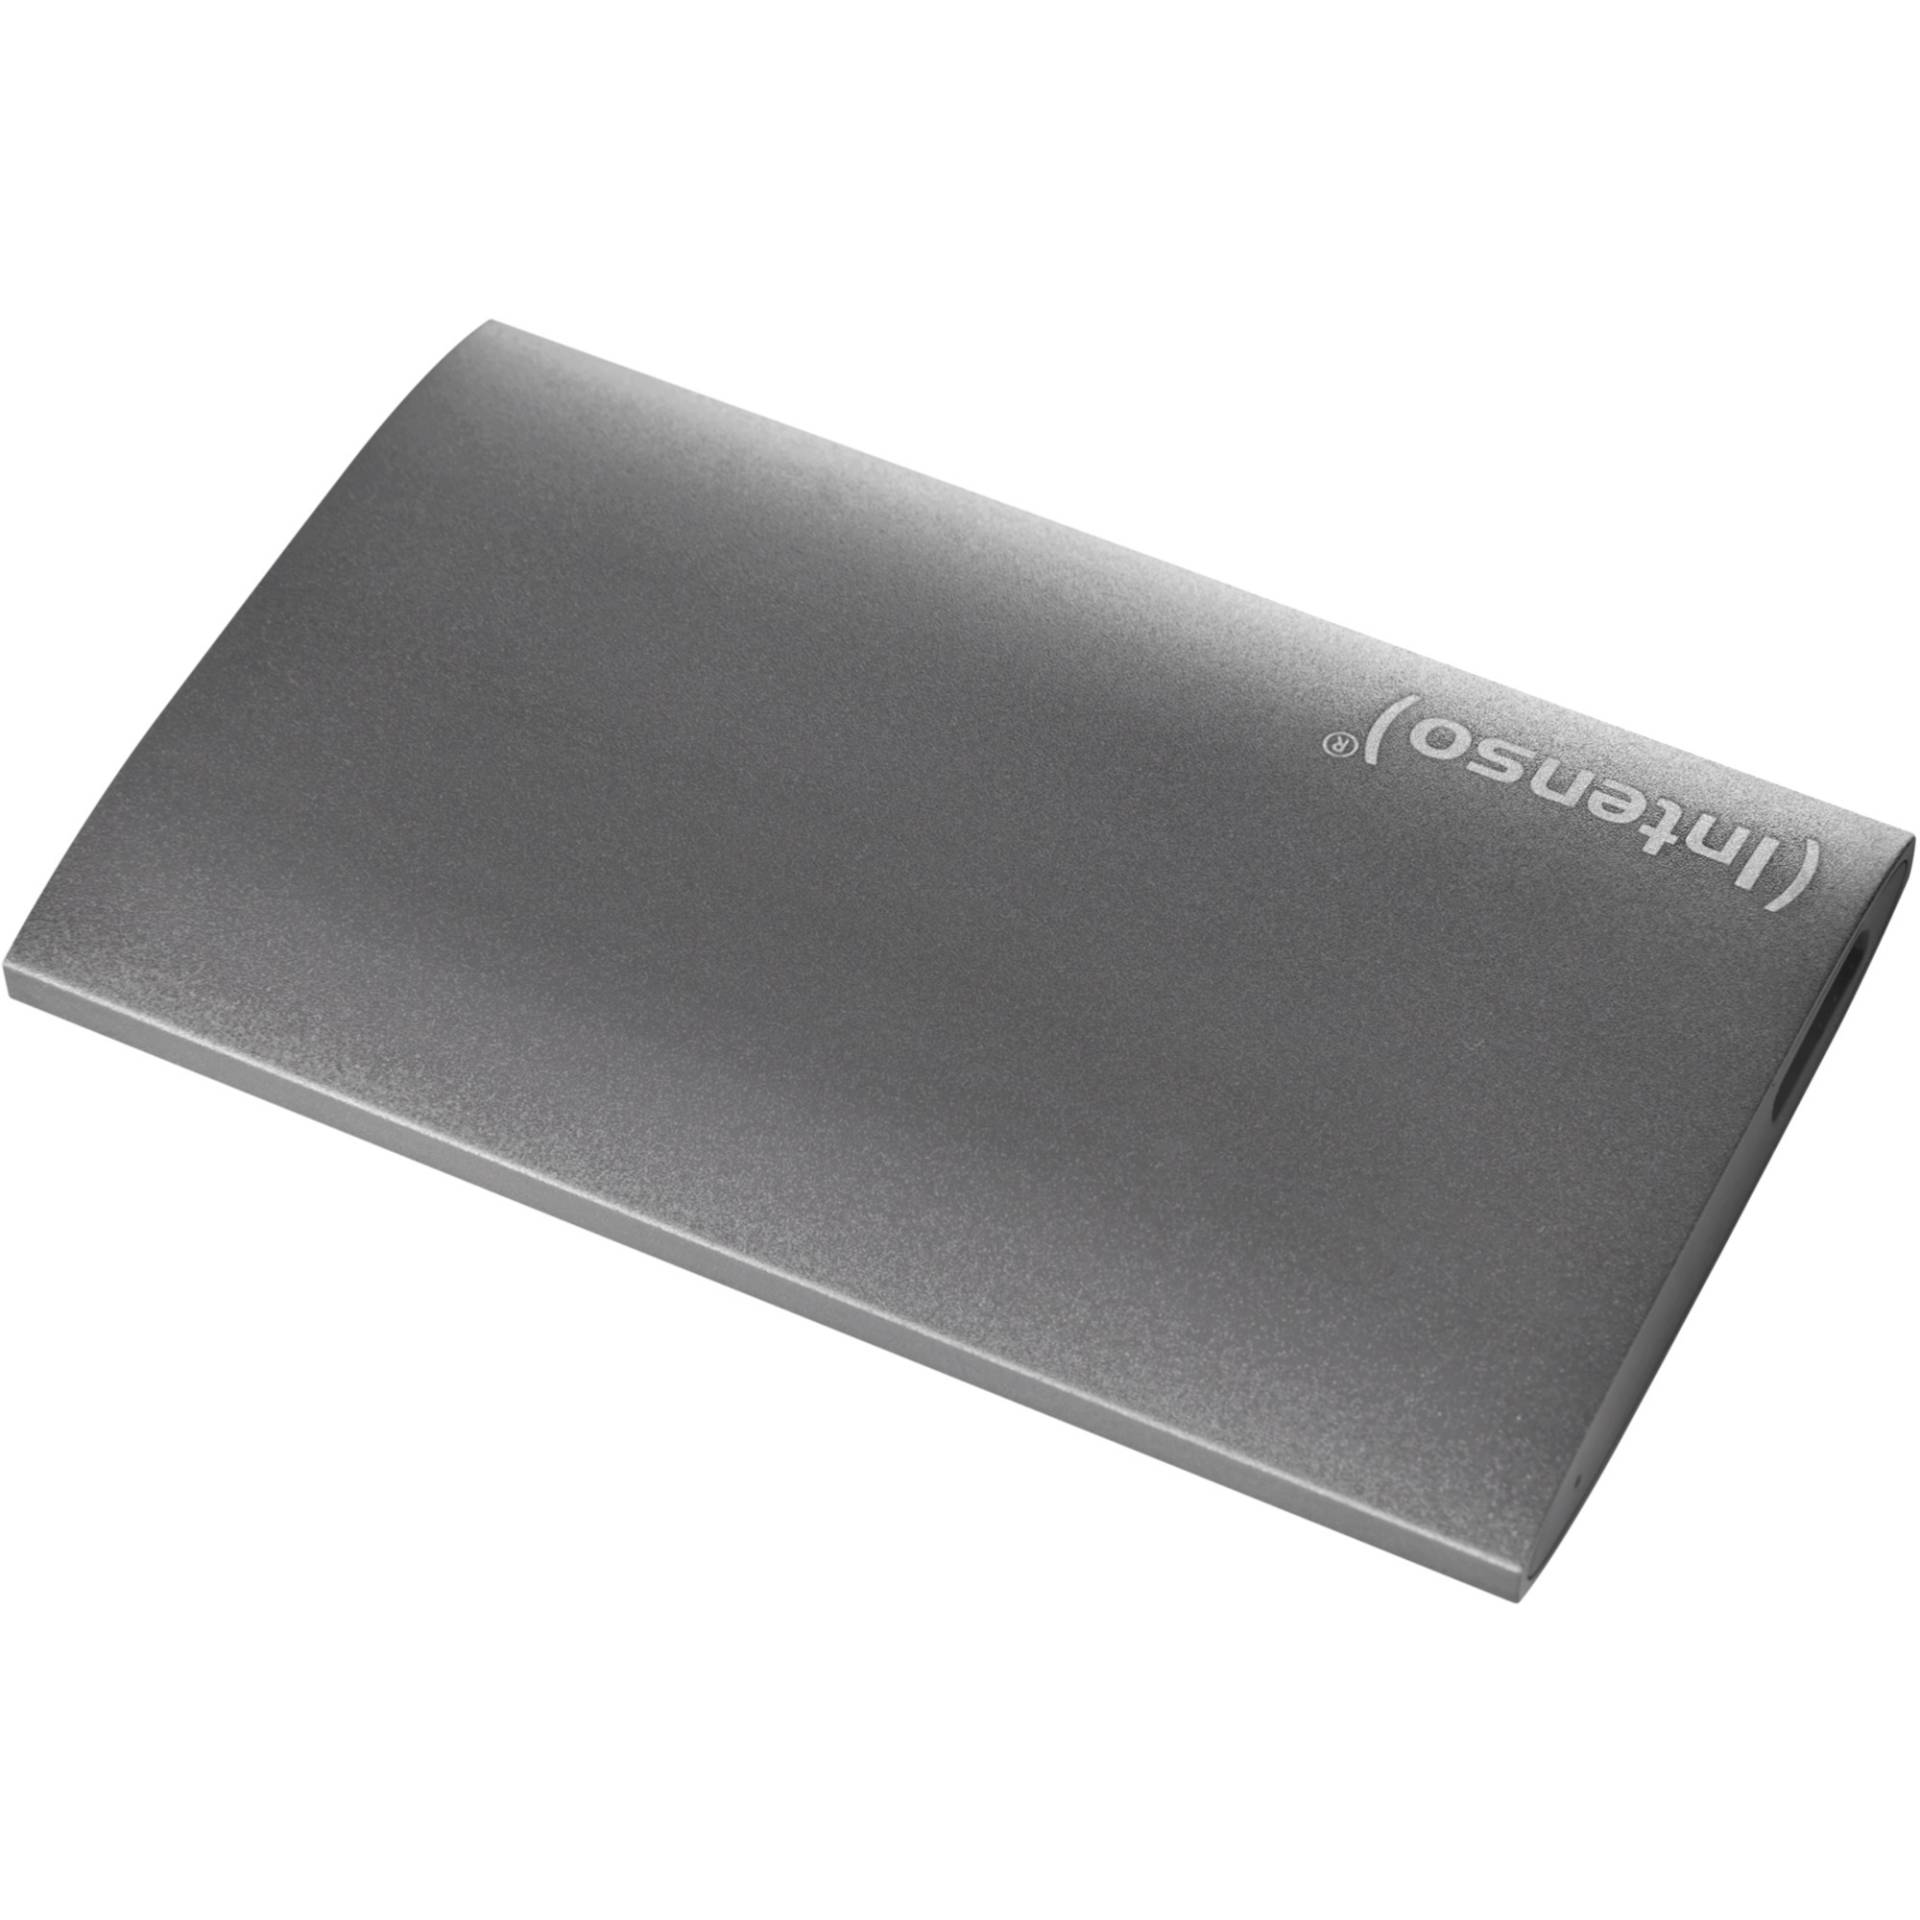 Portable SSD Premium 512 GB, Externe SSD von Intenso